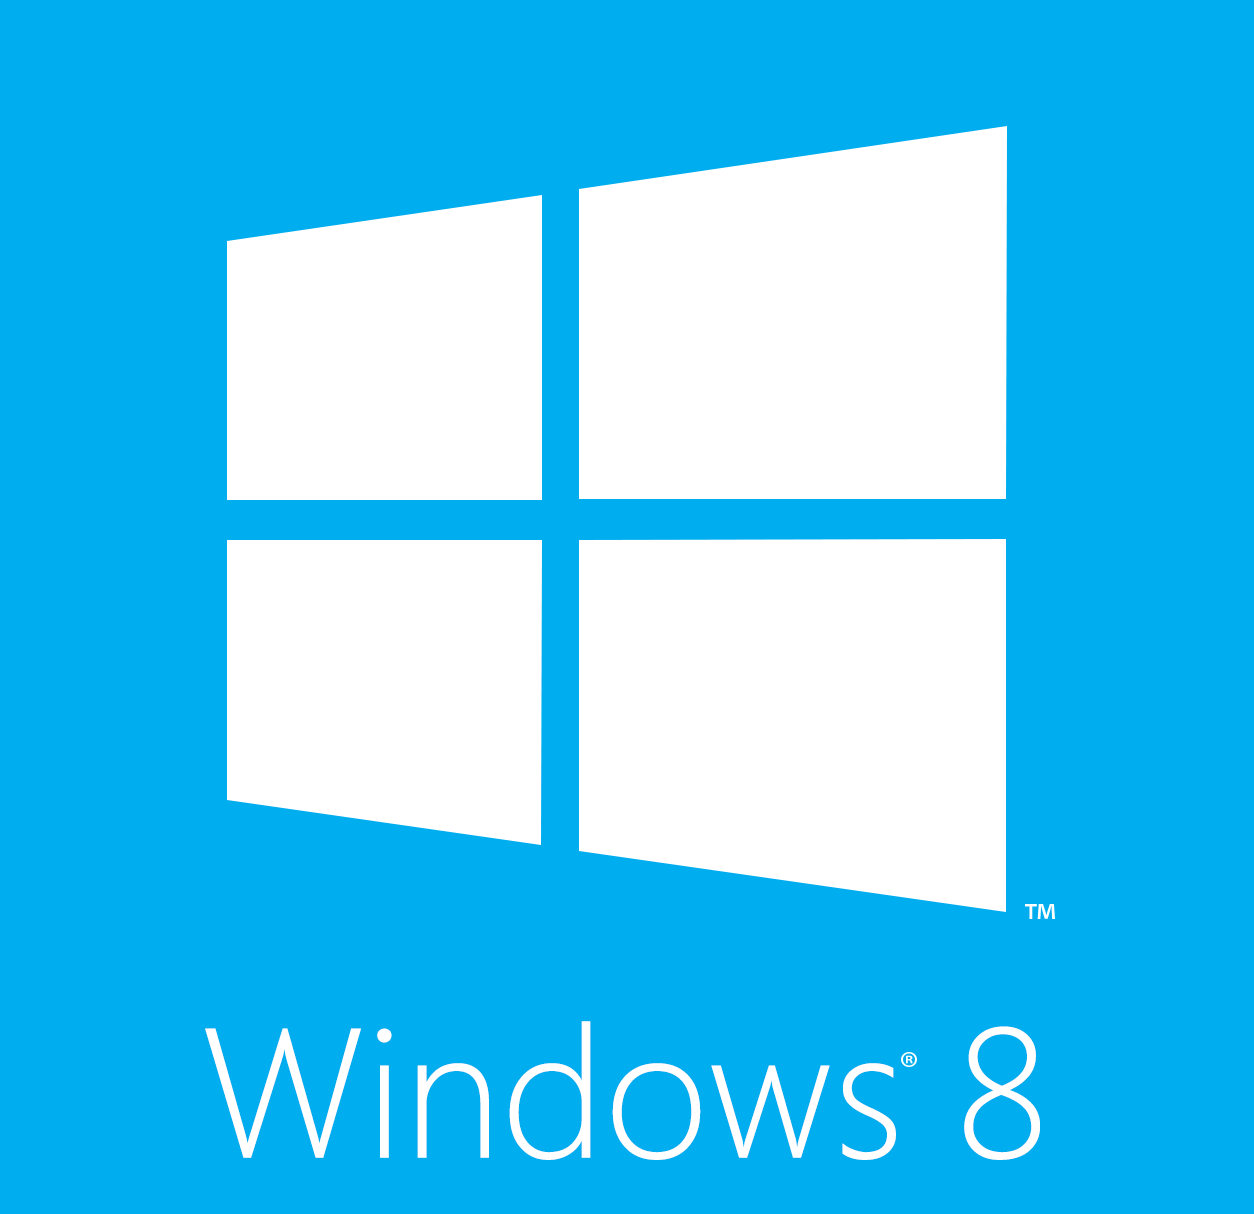 Win 8 Logo - Tutorial 1 - Starting your new Windows 8 PC | Top Windows Tutorials